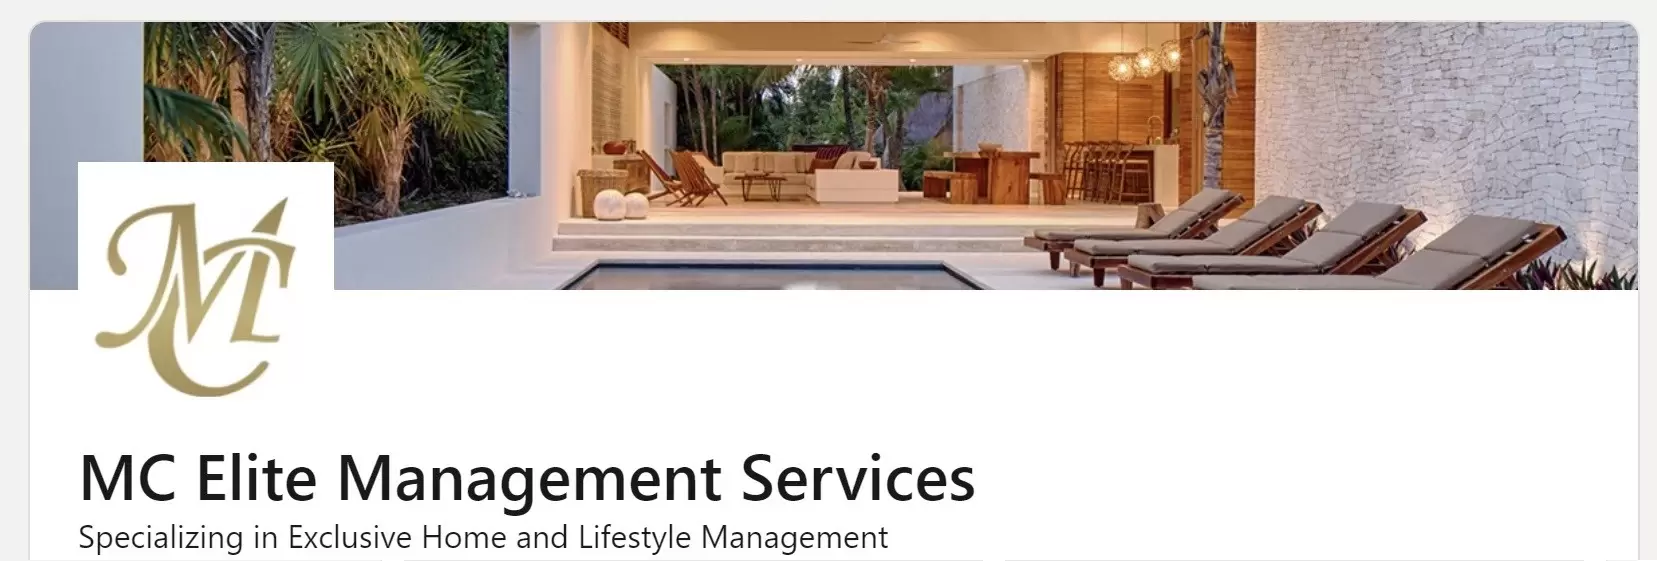 MC Elite Management Services on LinkedIn